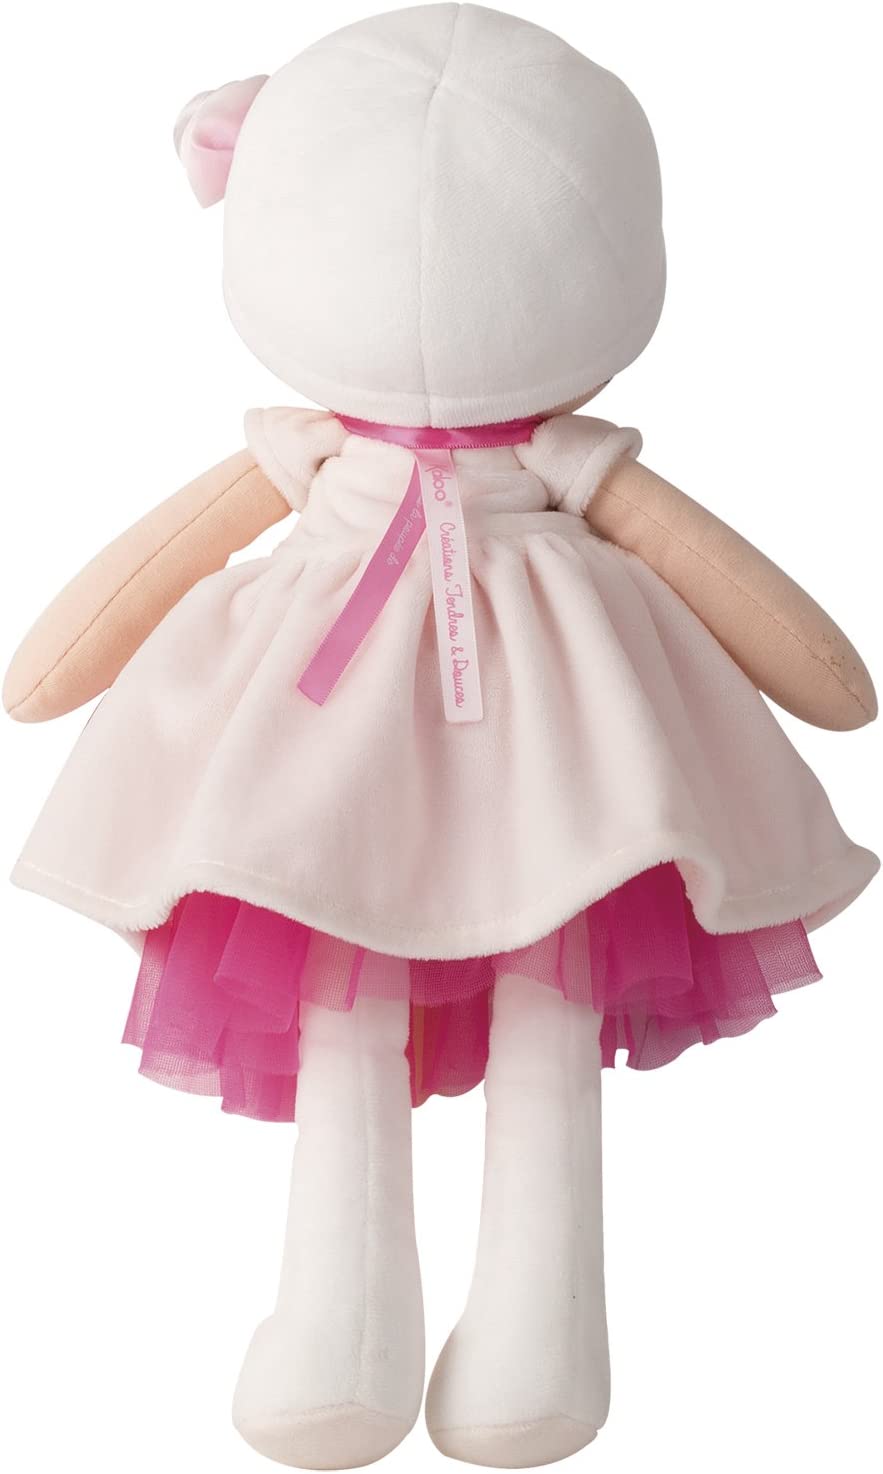 Perle bambola in tessuto 40cm